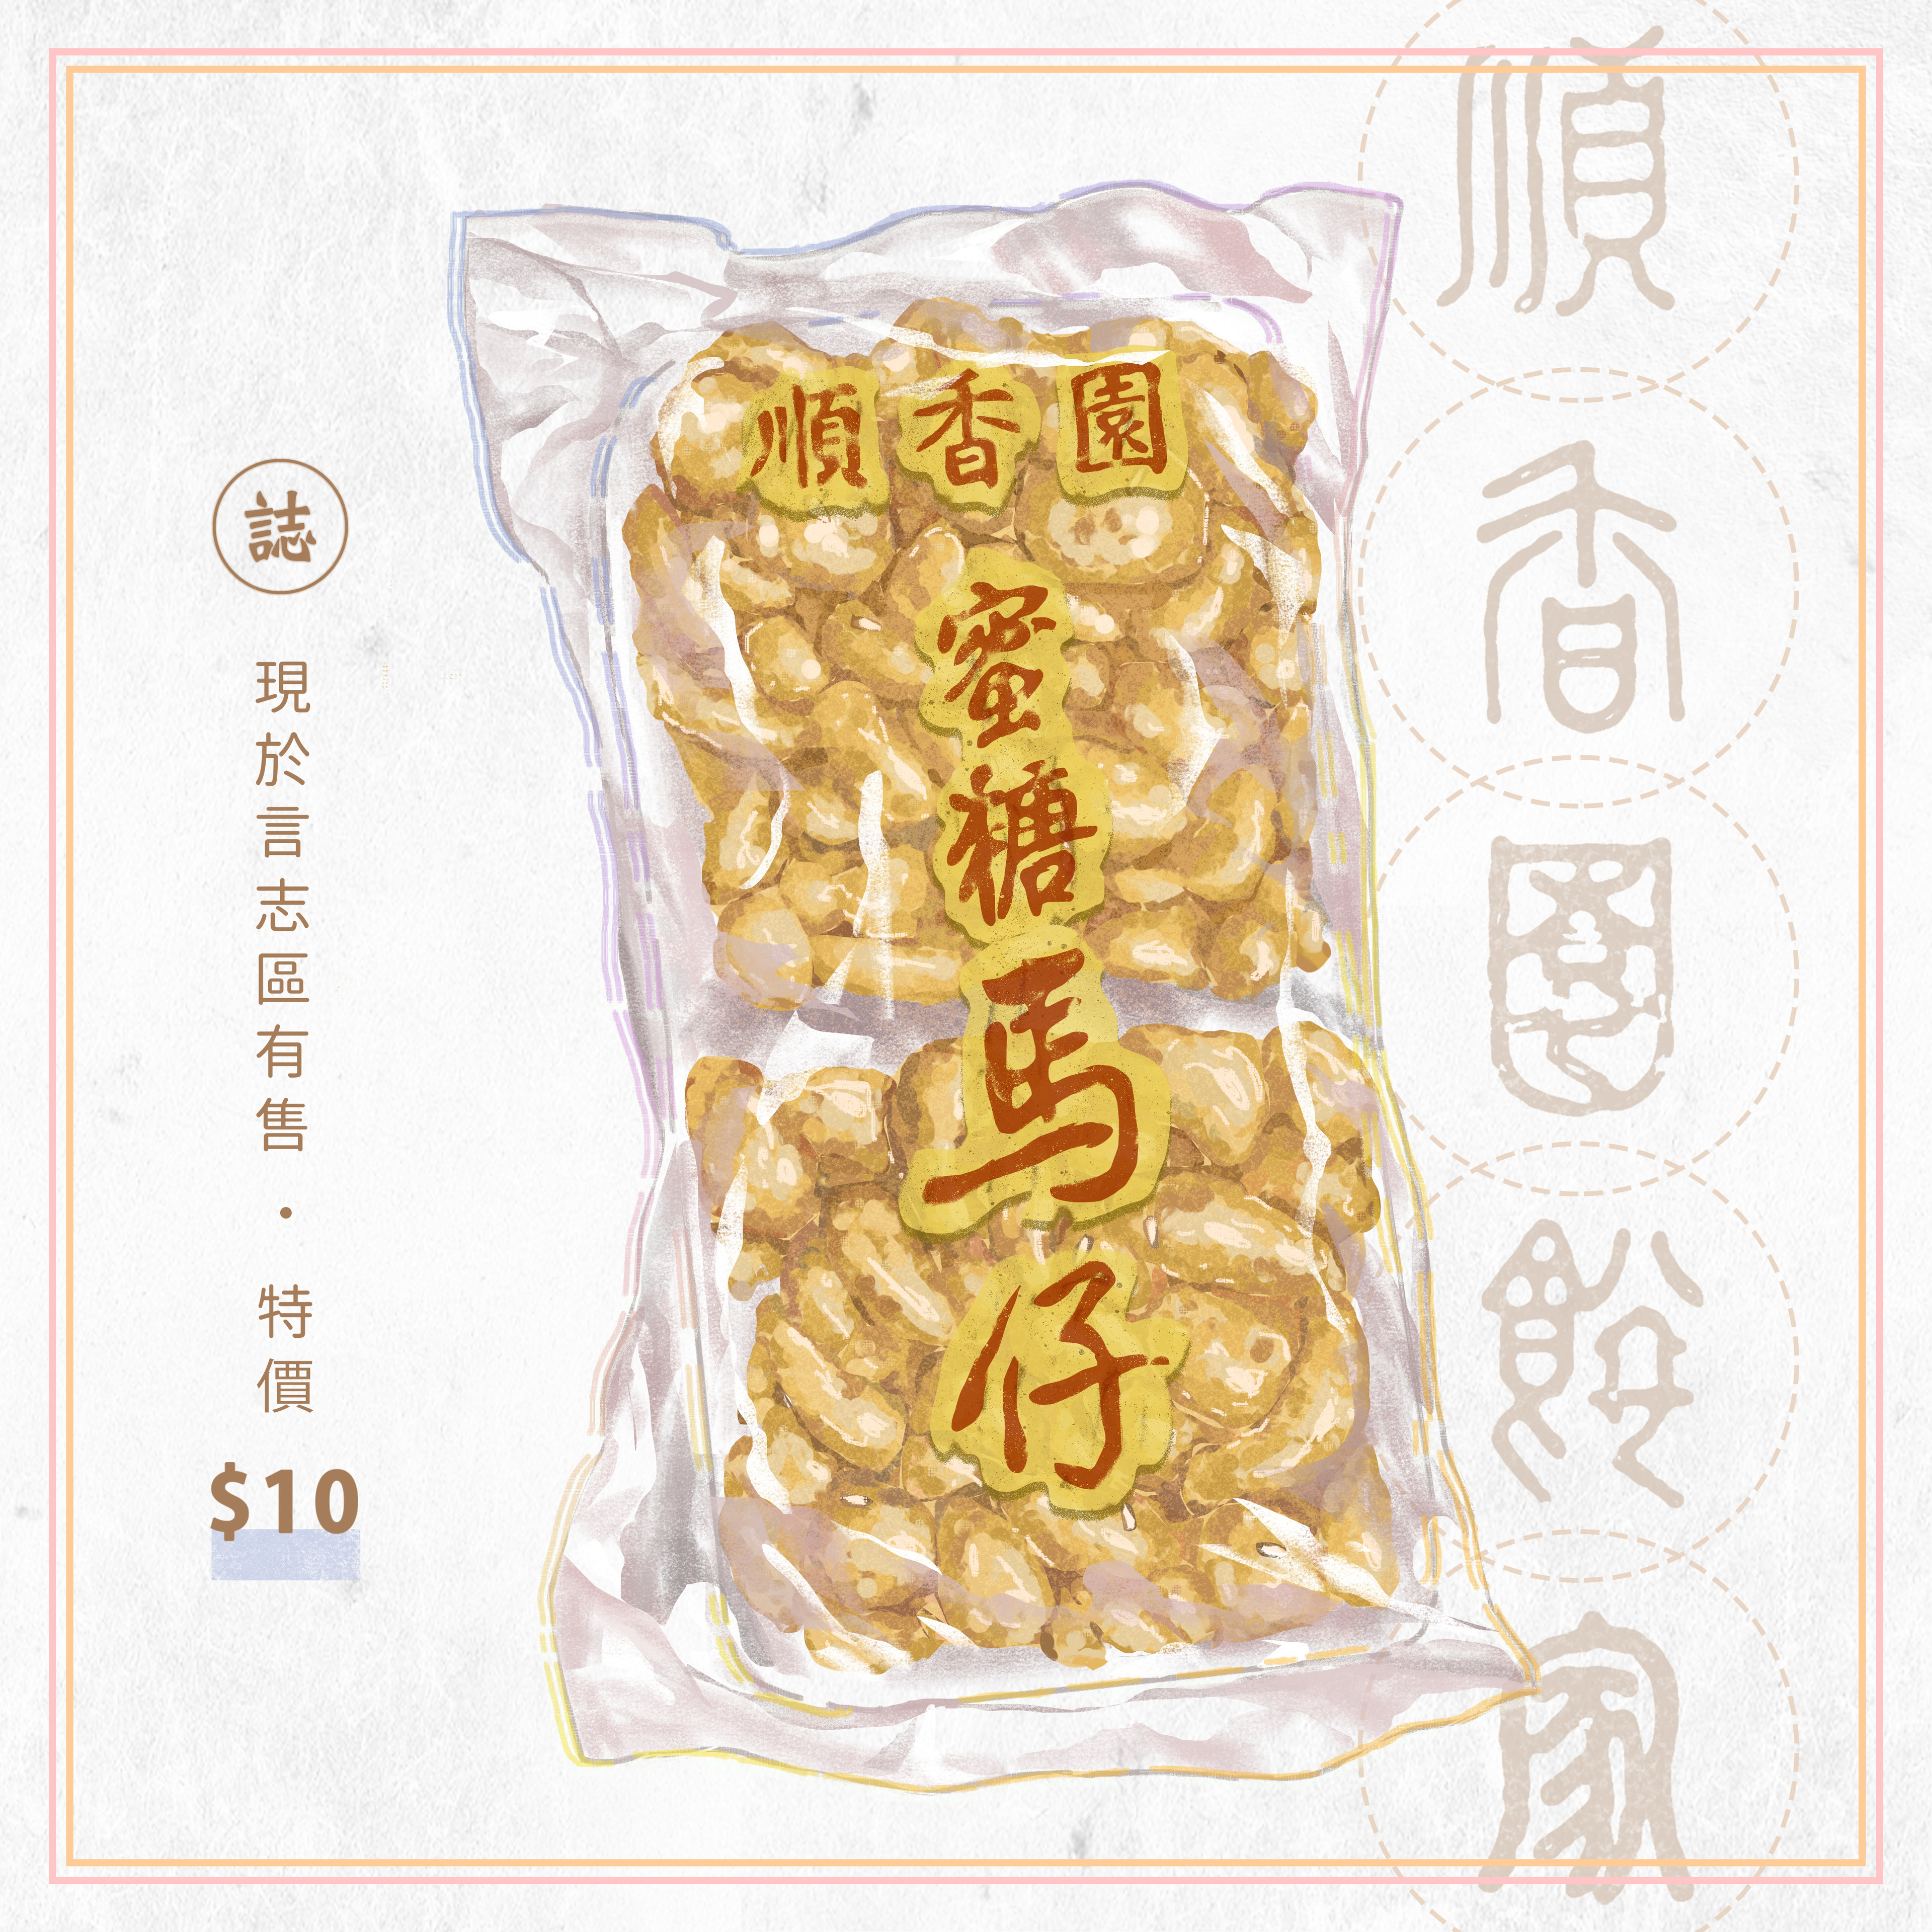 'Shun Heung Yuan Honey Crispies'
(View: https://www.instagram.com/p/B_mZrbfJ_yQ/?igsh=MTI5cW14ZDJuamRvdw== )